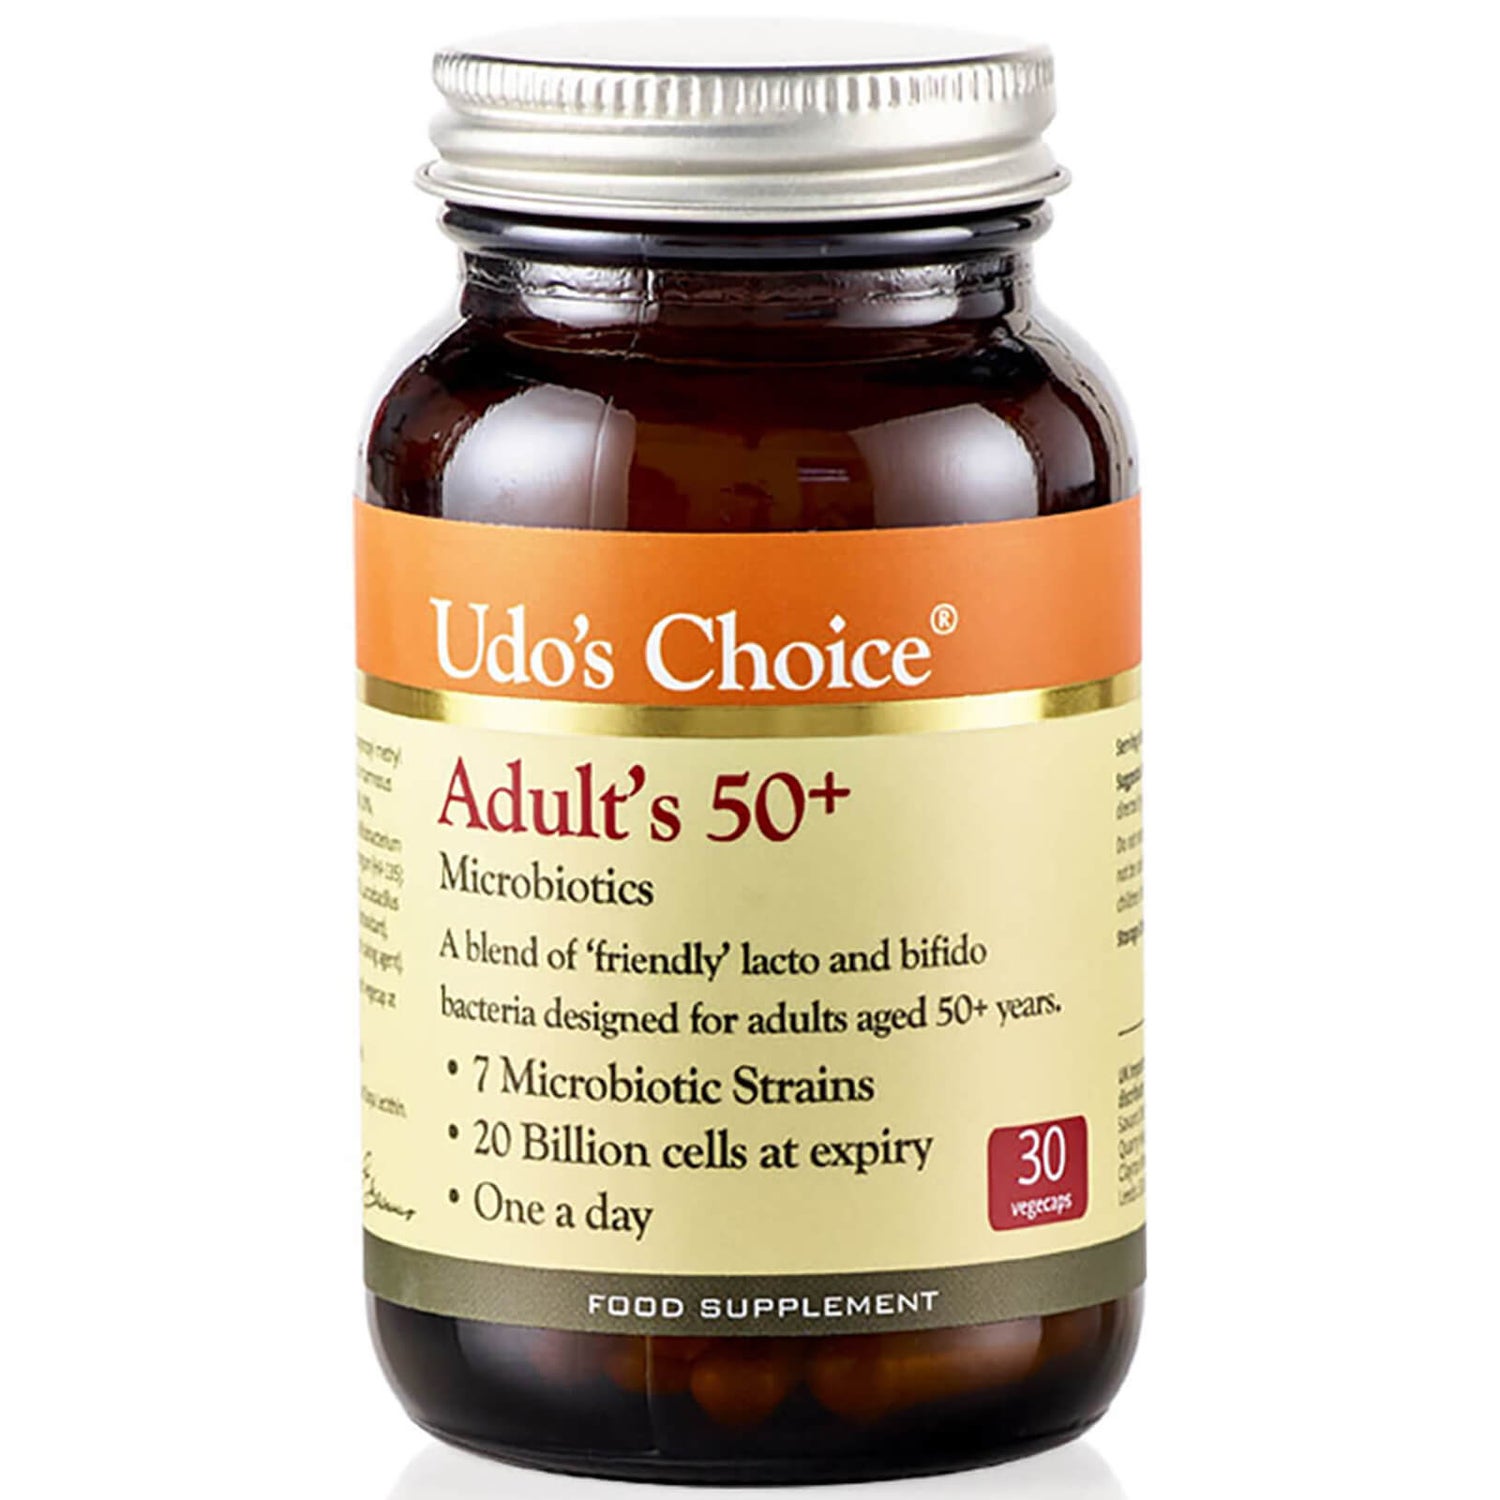 Udo's Choice Adult 50+ Blend Microbiotics - 30 kapsler